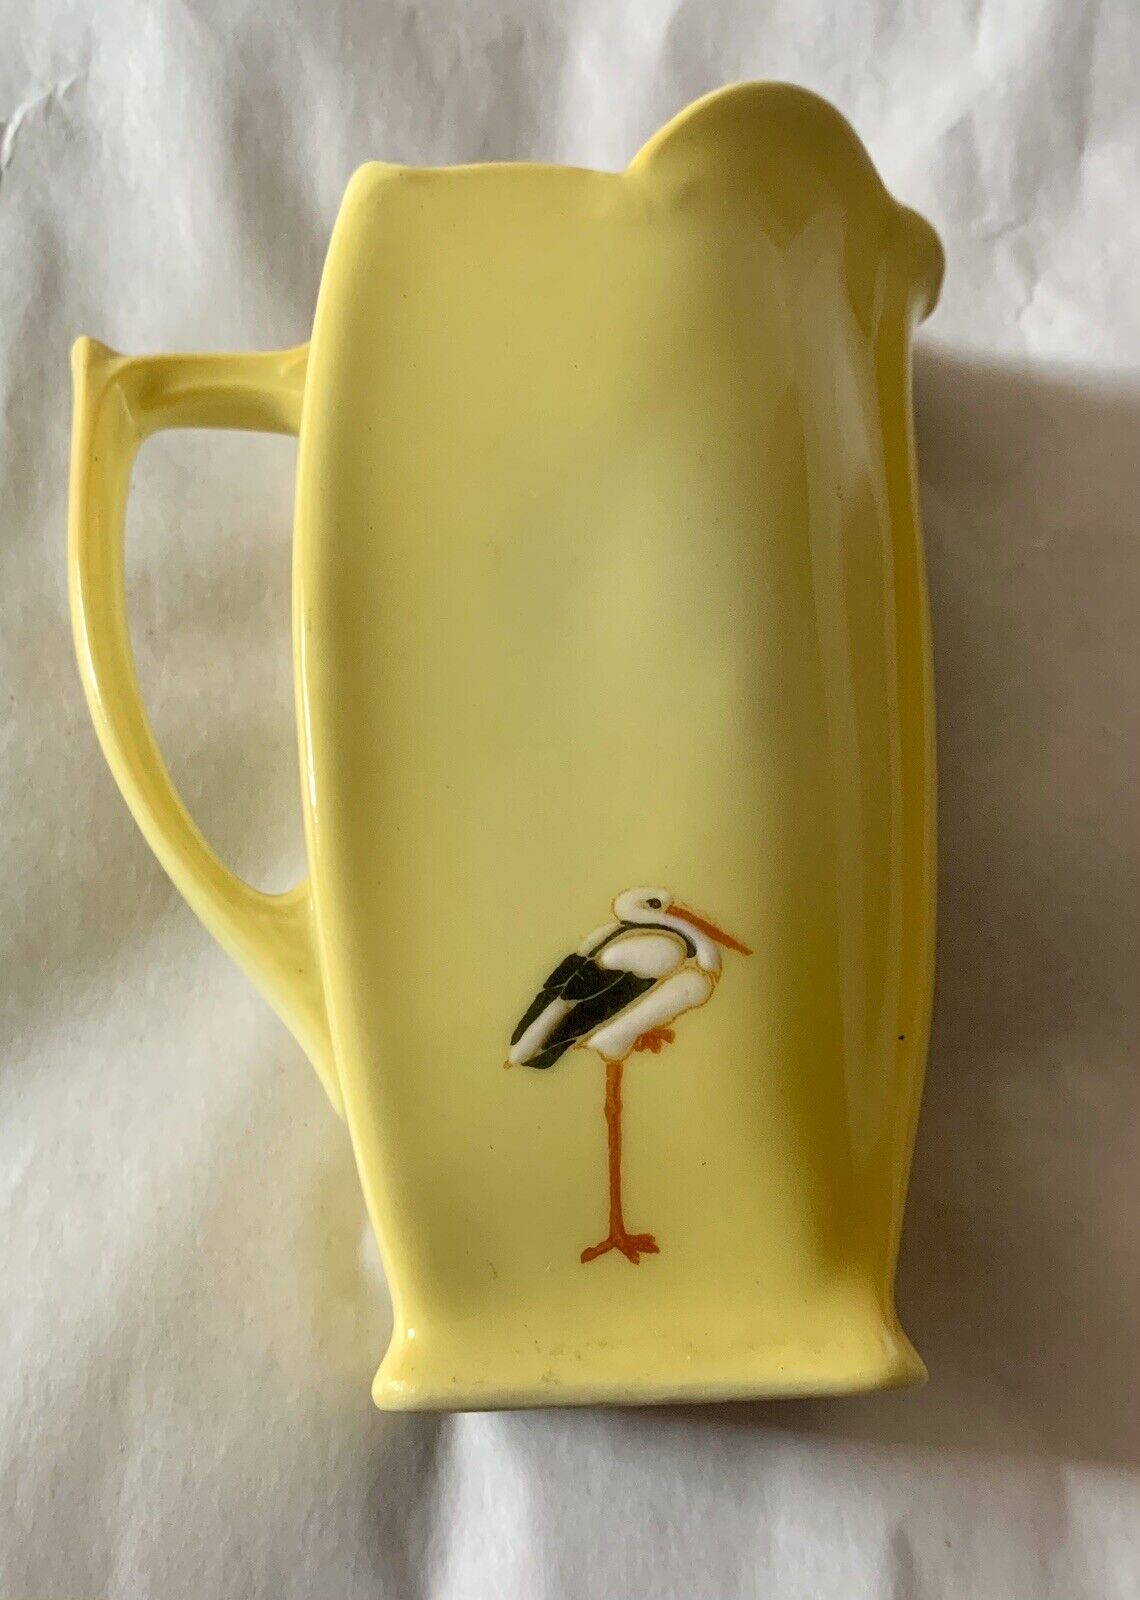 Rare Royal Bayreuth Yellow Stork Pitcher